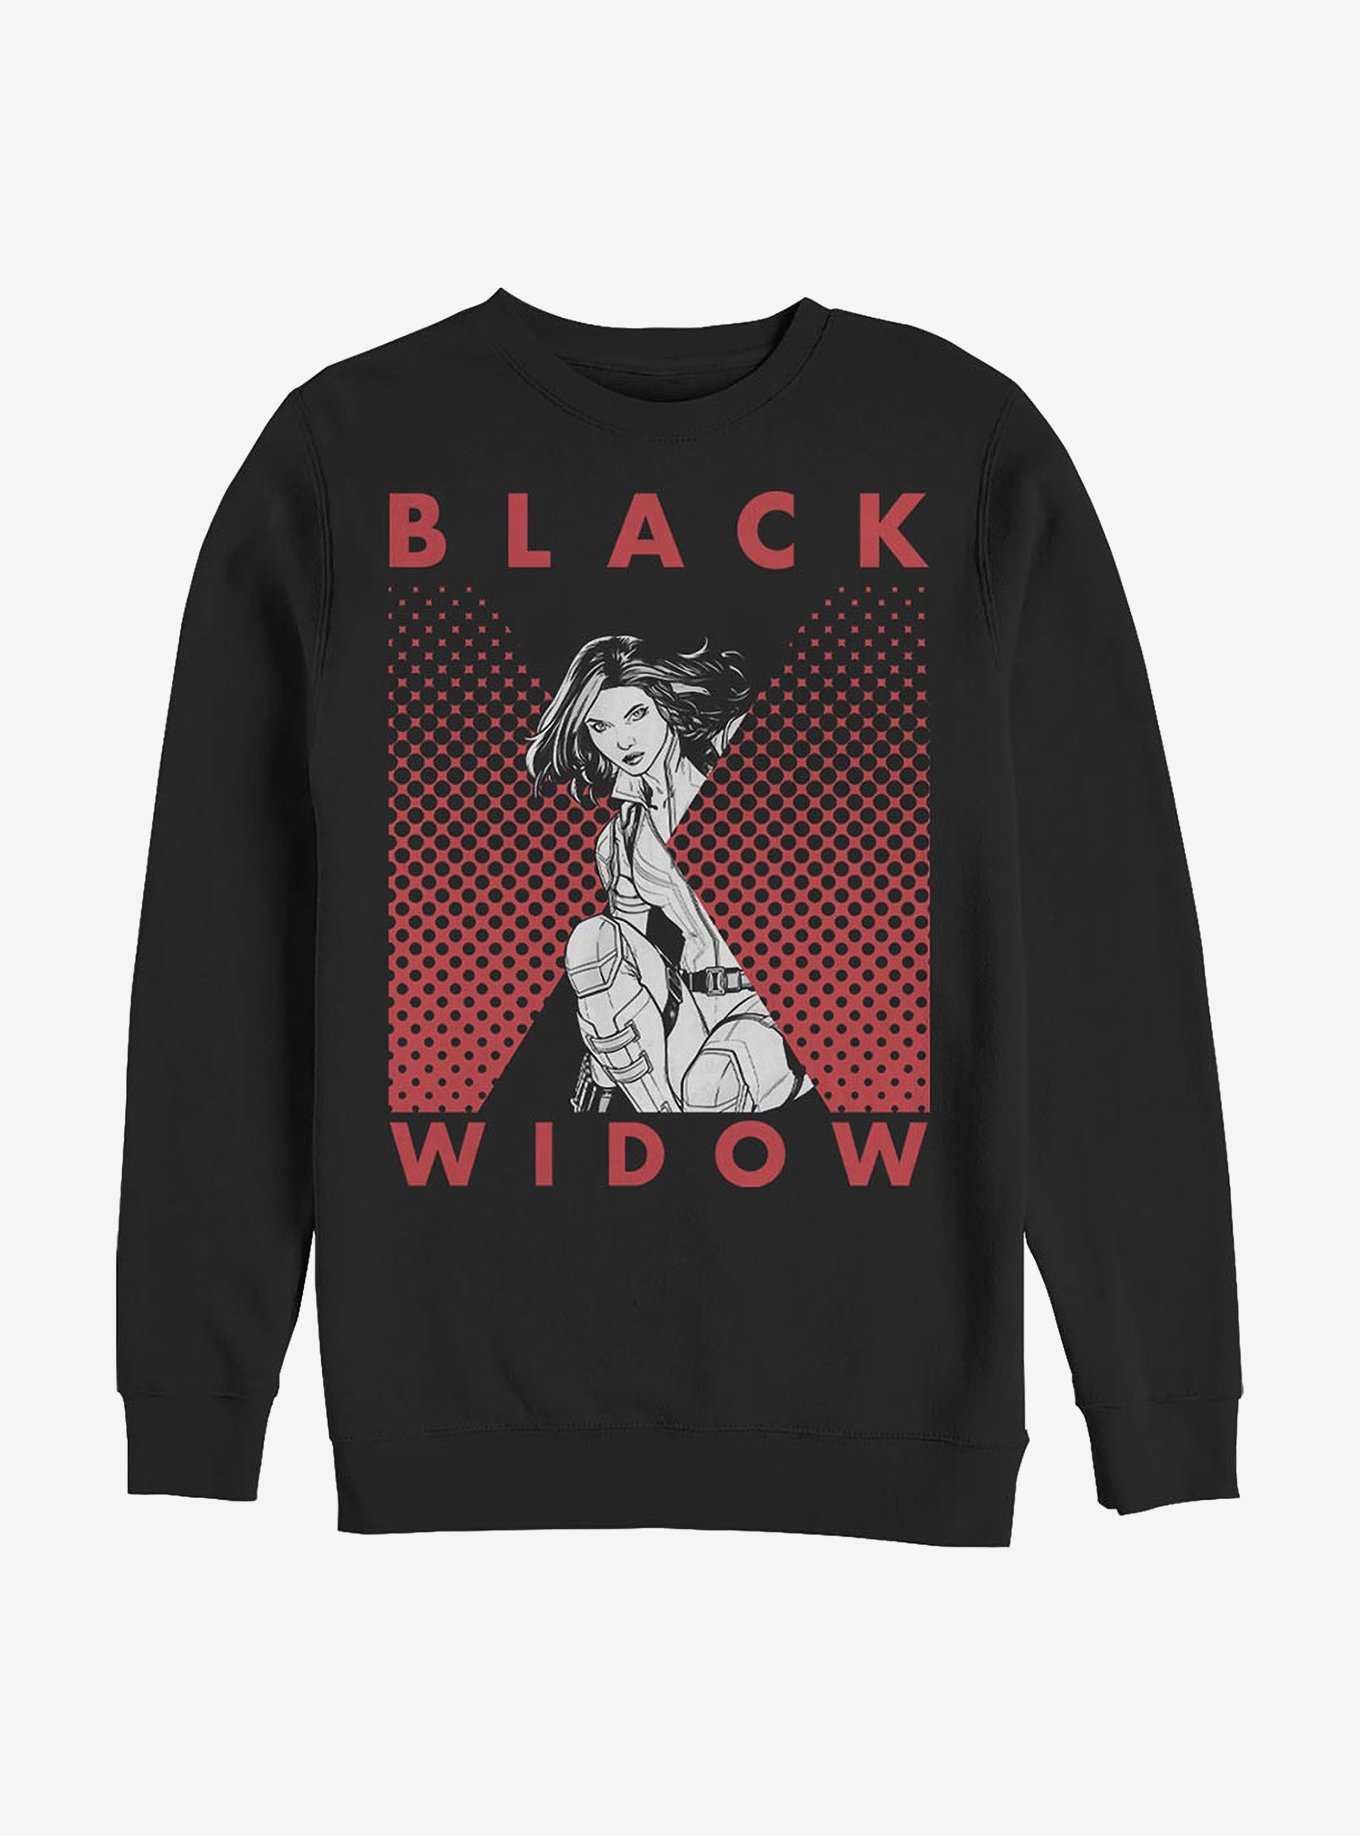 Marvel Black Widow Halftone Black Widow Crew Sweater, , hi-res